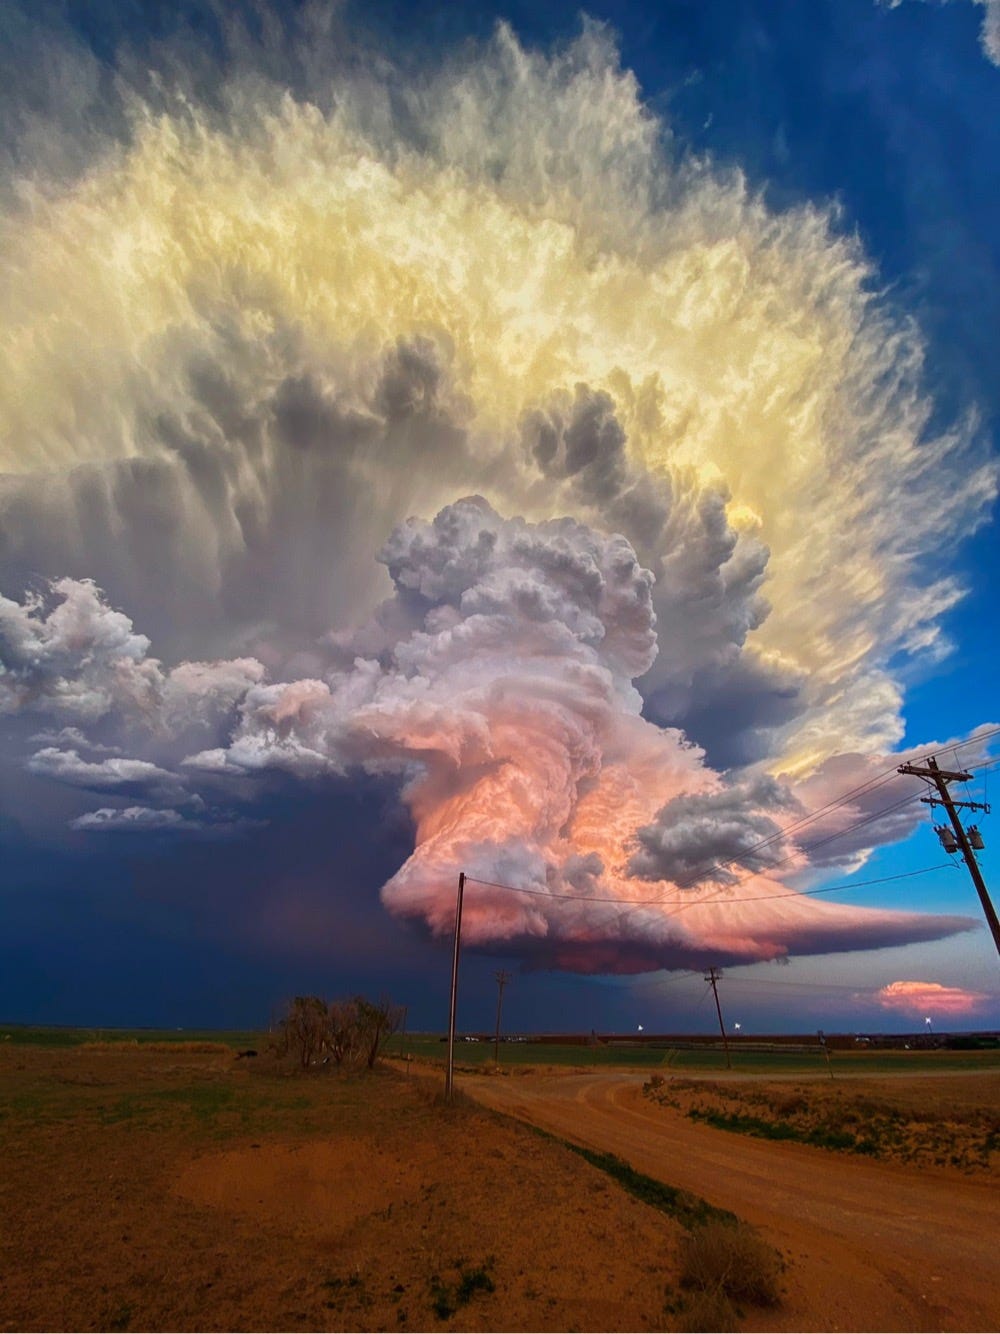 A gobsmacking.photo of a sunset thundercloud. Daaaaaang.